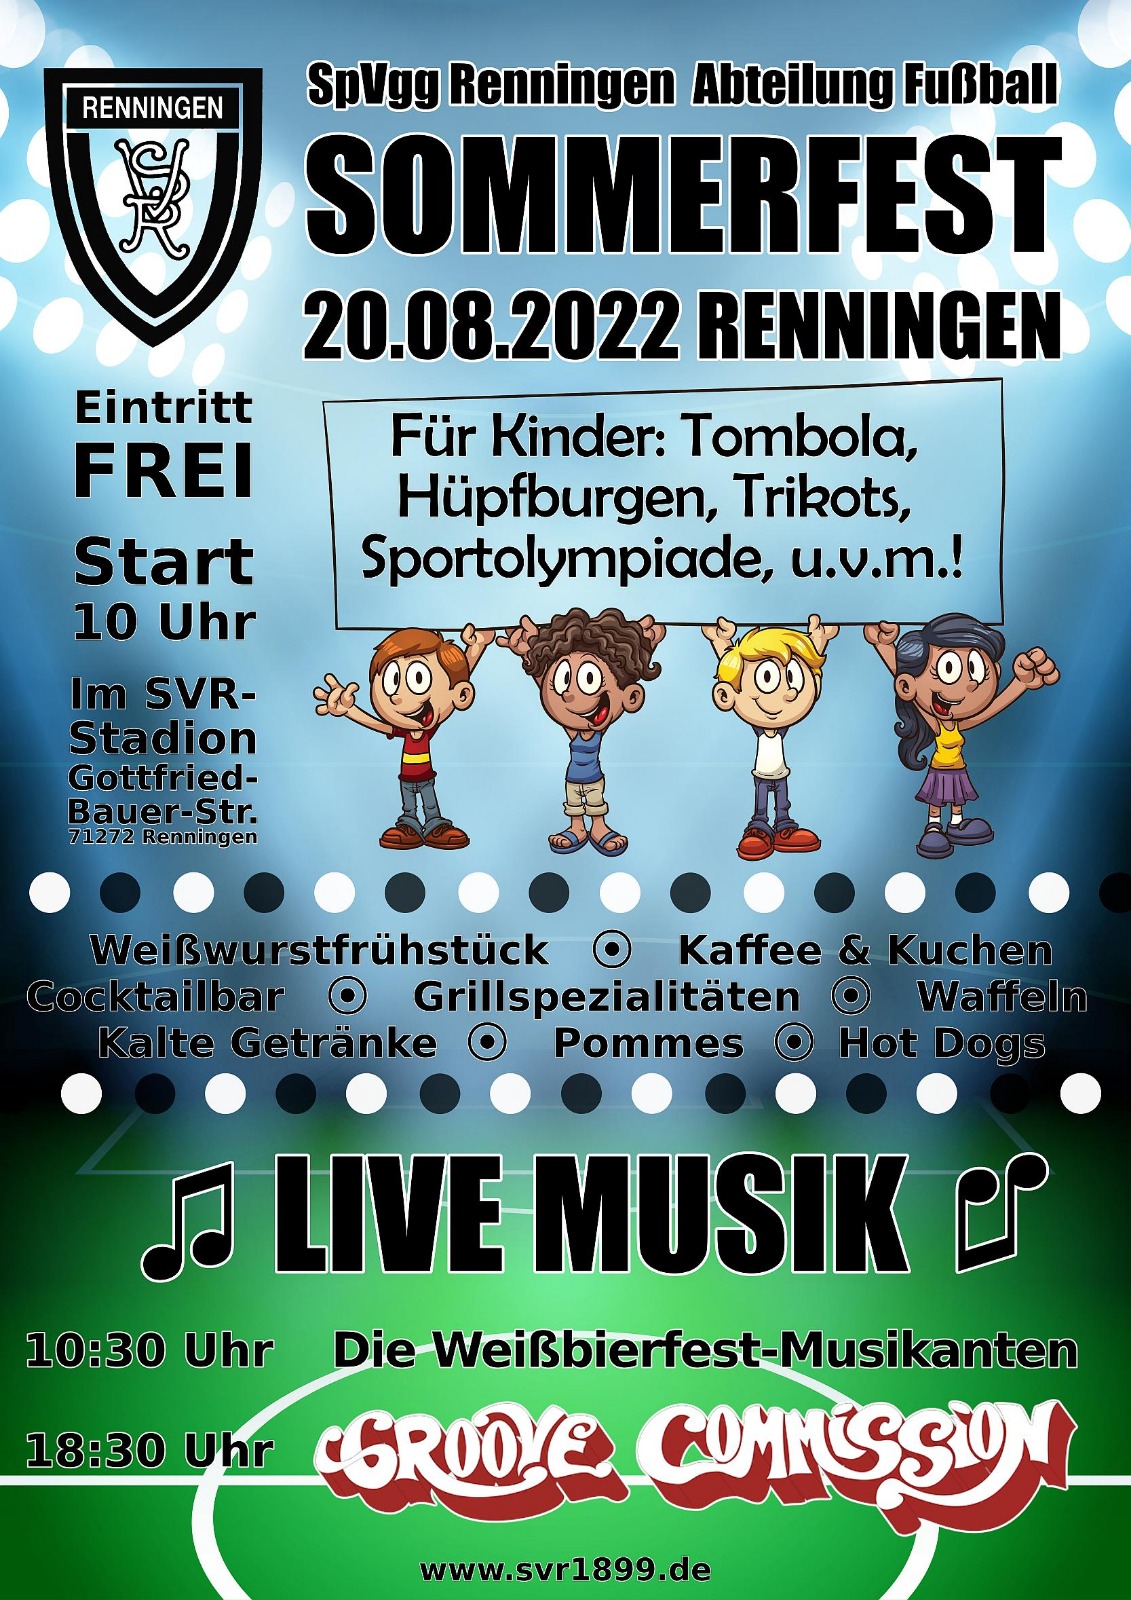 Sommerfest-SpVgg-Renningen_Ankündigung_Poster